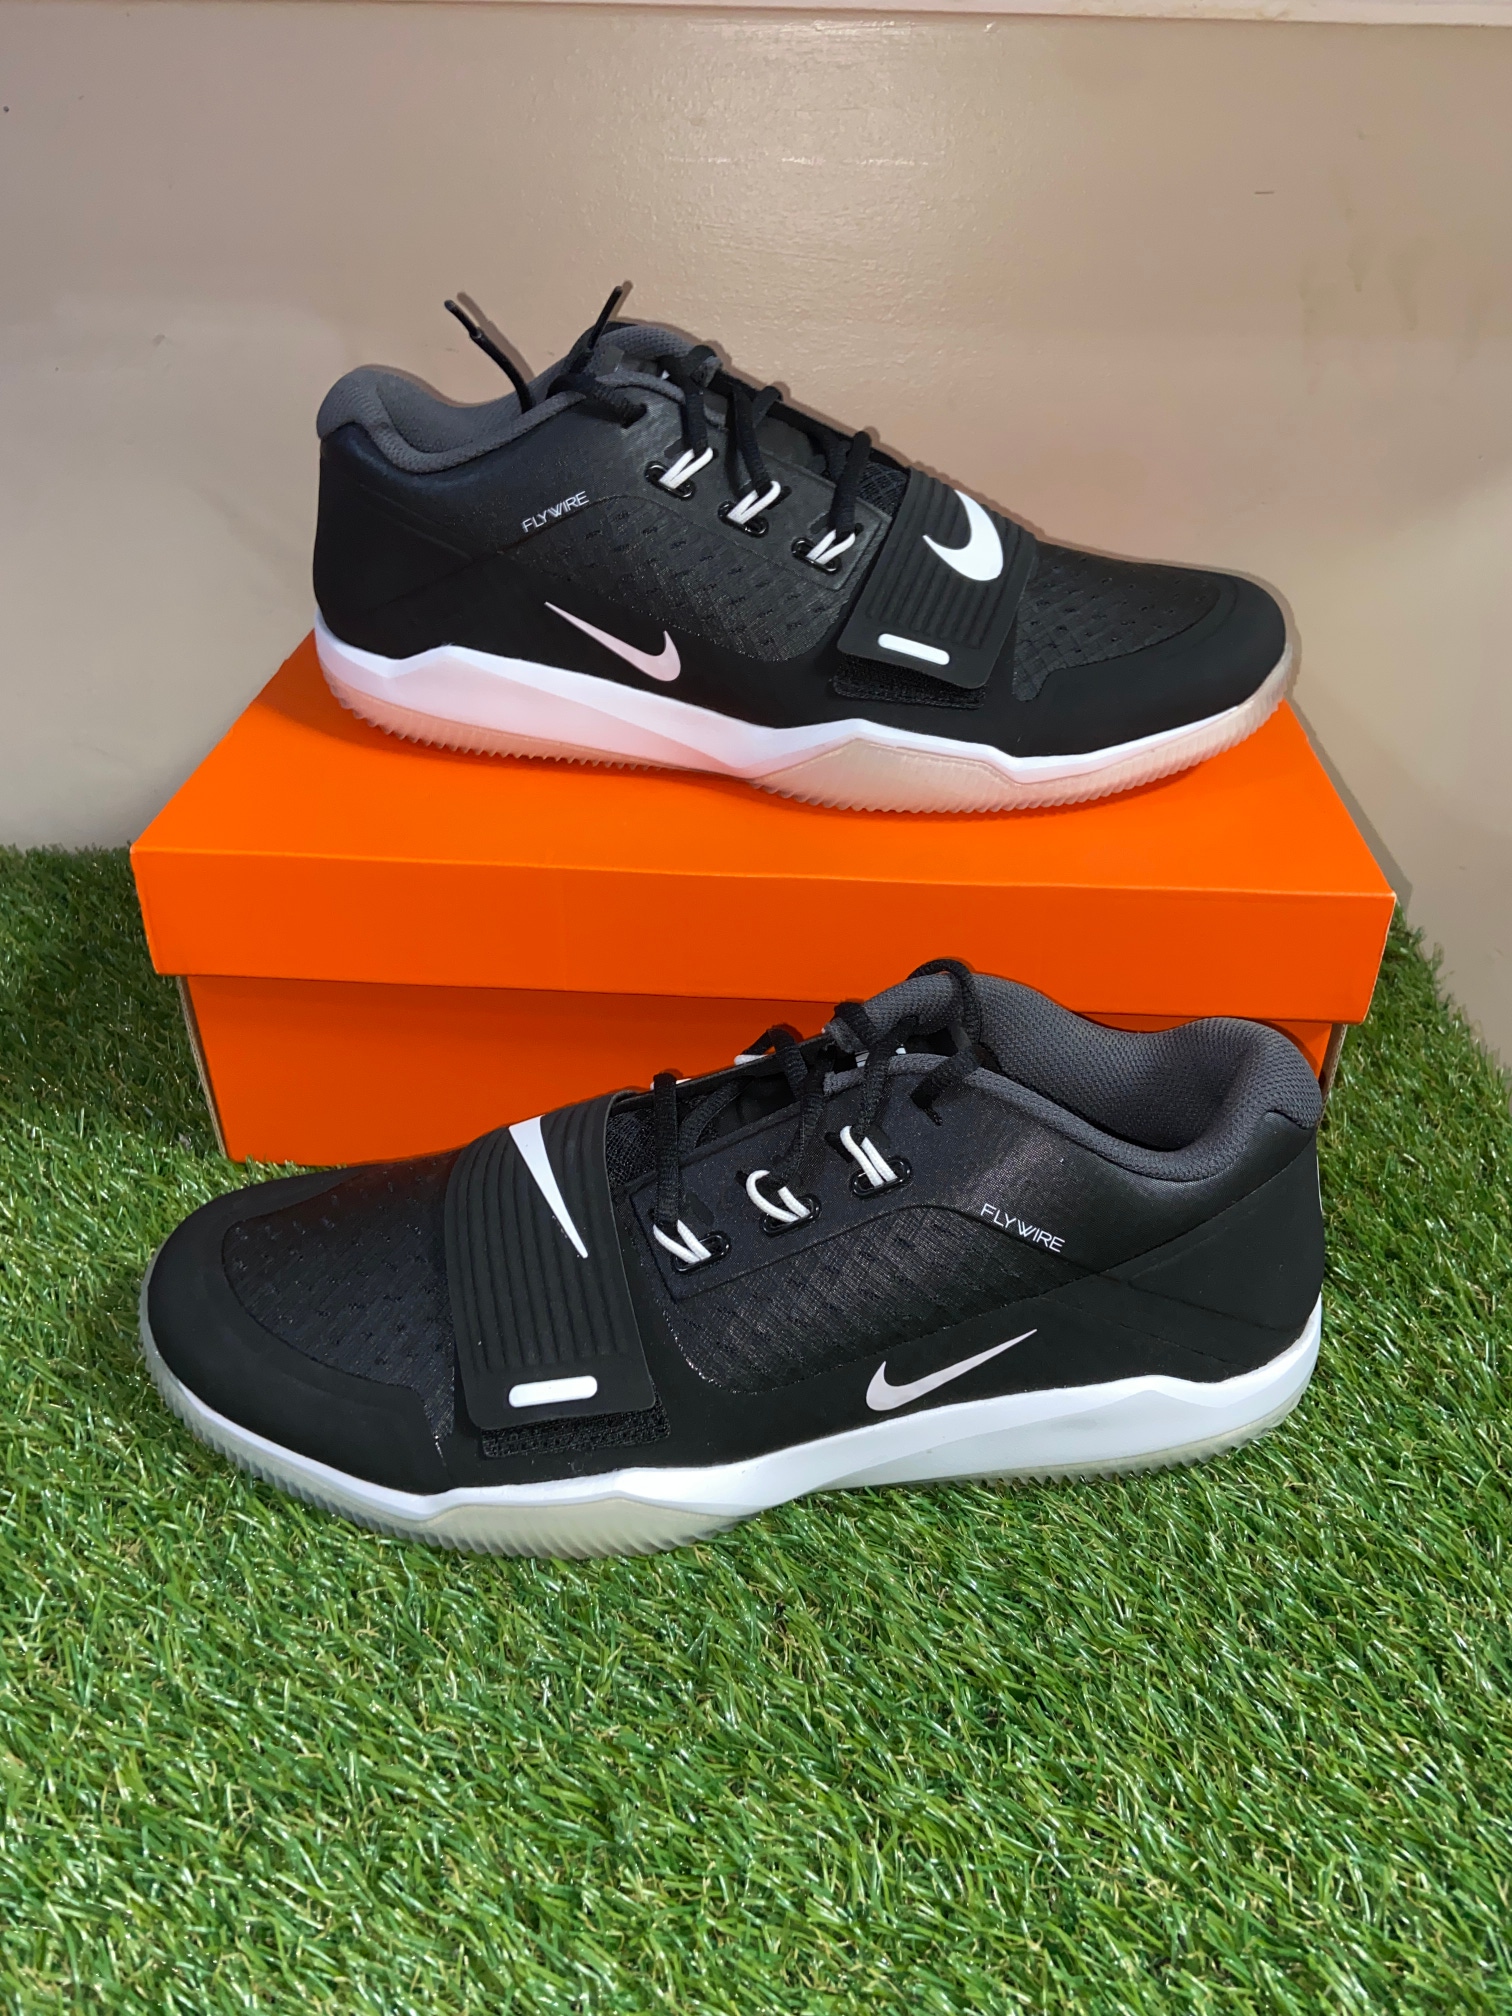 Nike Alpha Menace Turf Low Football Shoe Black White AQ8129-001 Men Sz 12.5 NEW